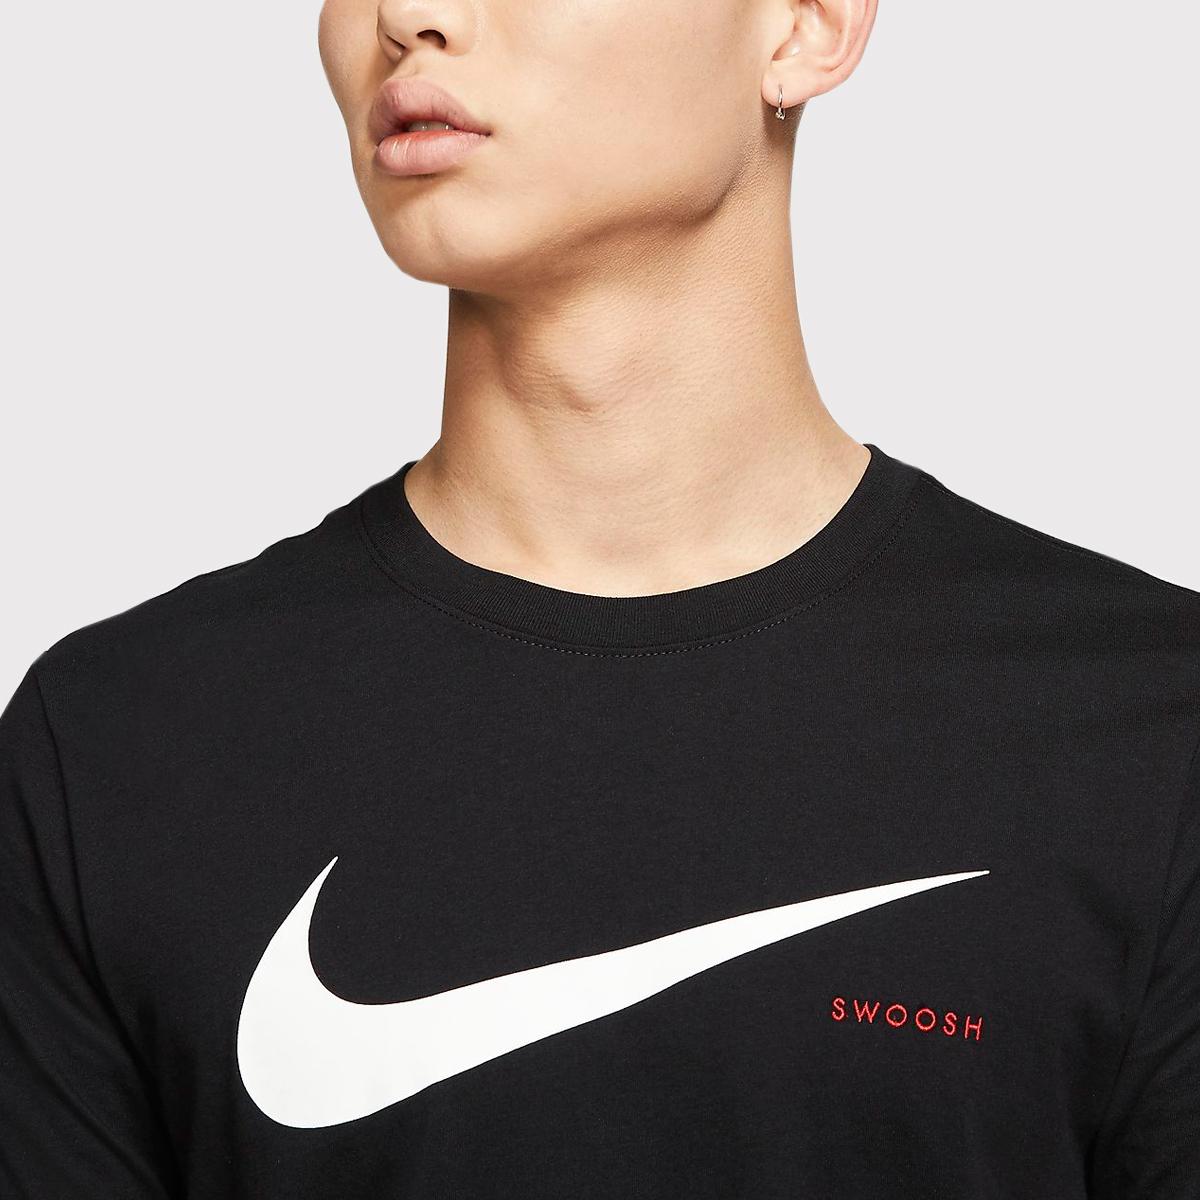 Camiseta Nike Sportswear Swoosh Masculino Preto